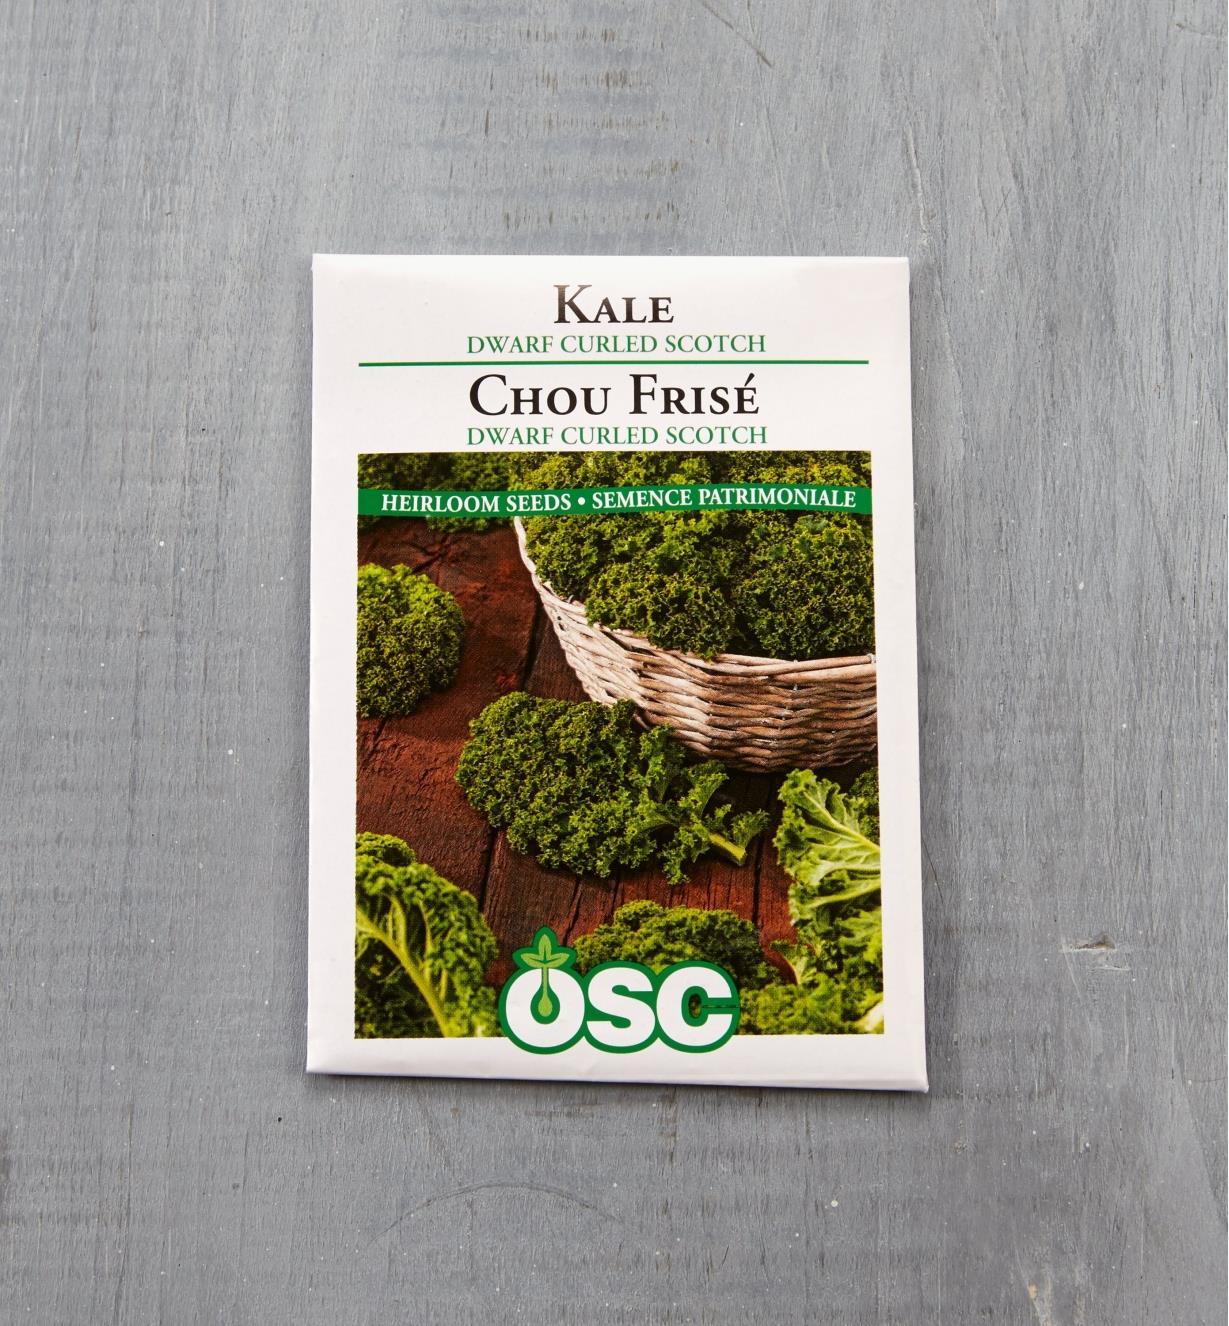 SD145 - Kale, Dwarf Curled Scotch